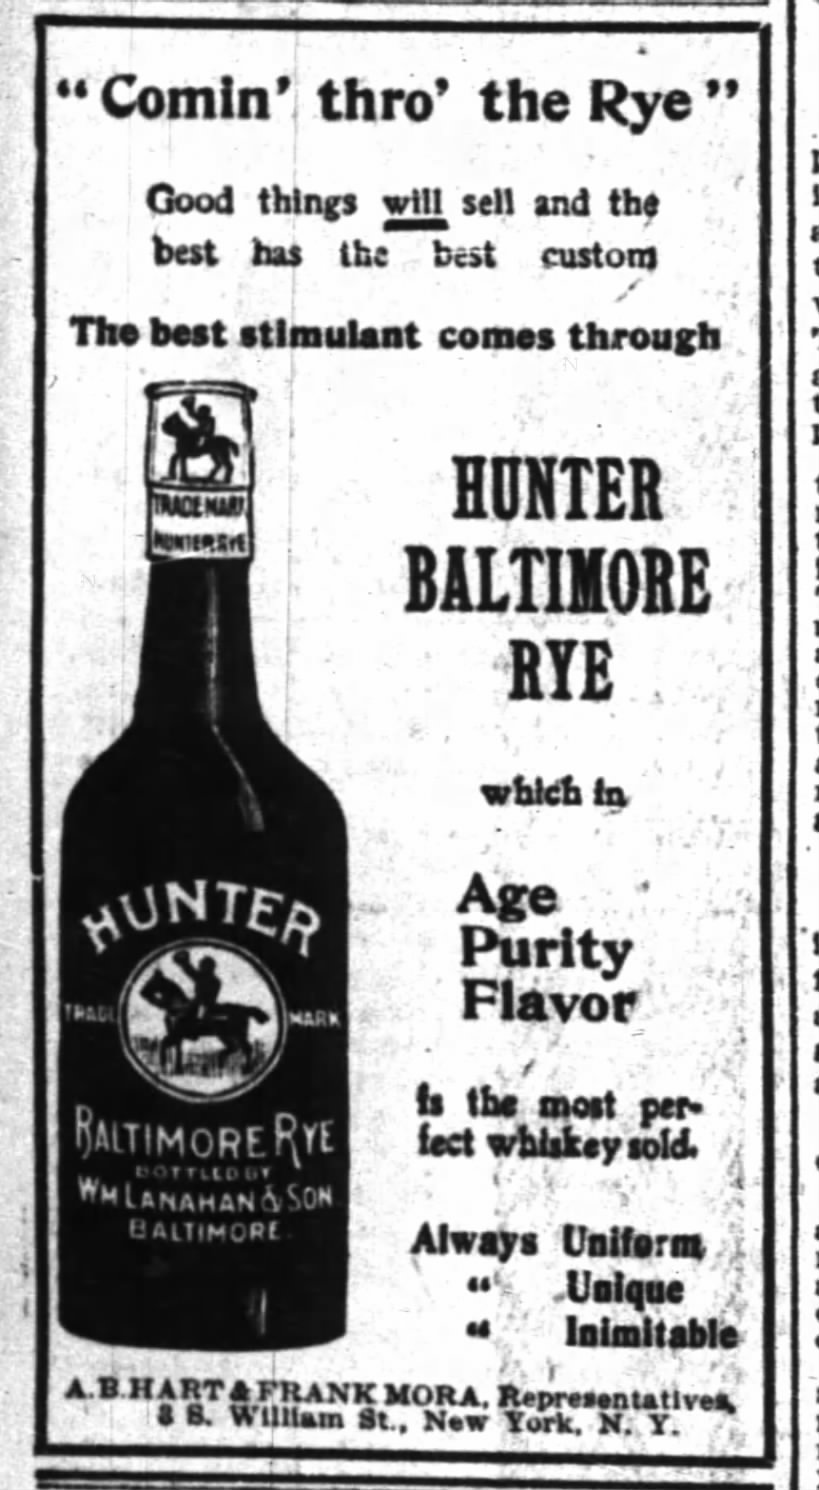 Hunter Baltimore Rye, NYT June 8, 1900 http://www.newspapers.com/image/#138|20482627